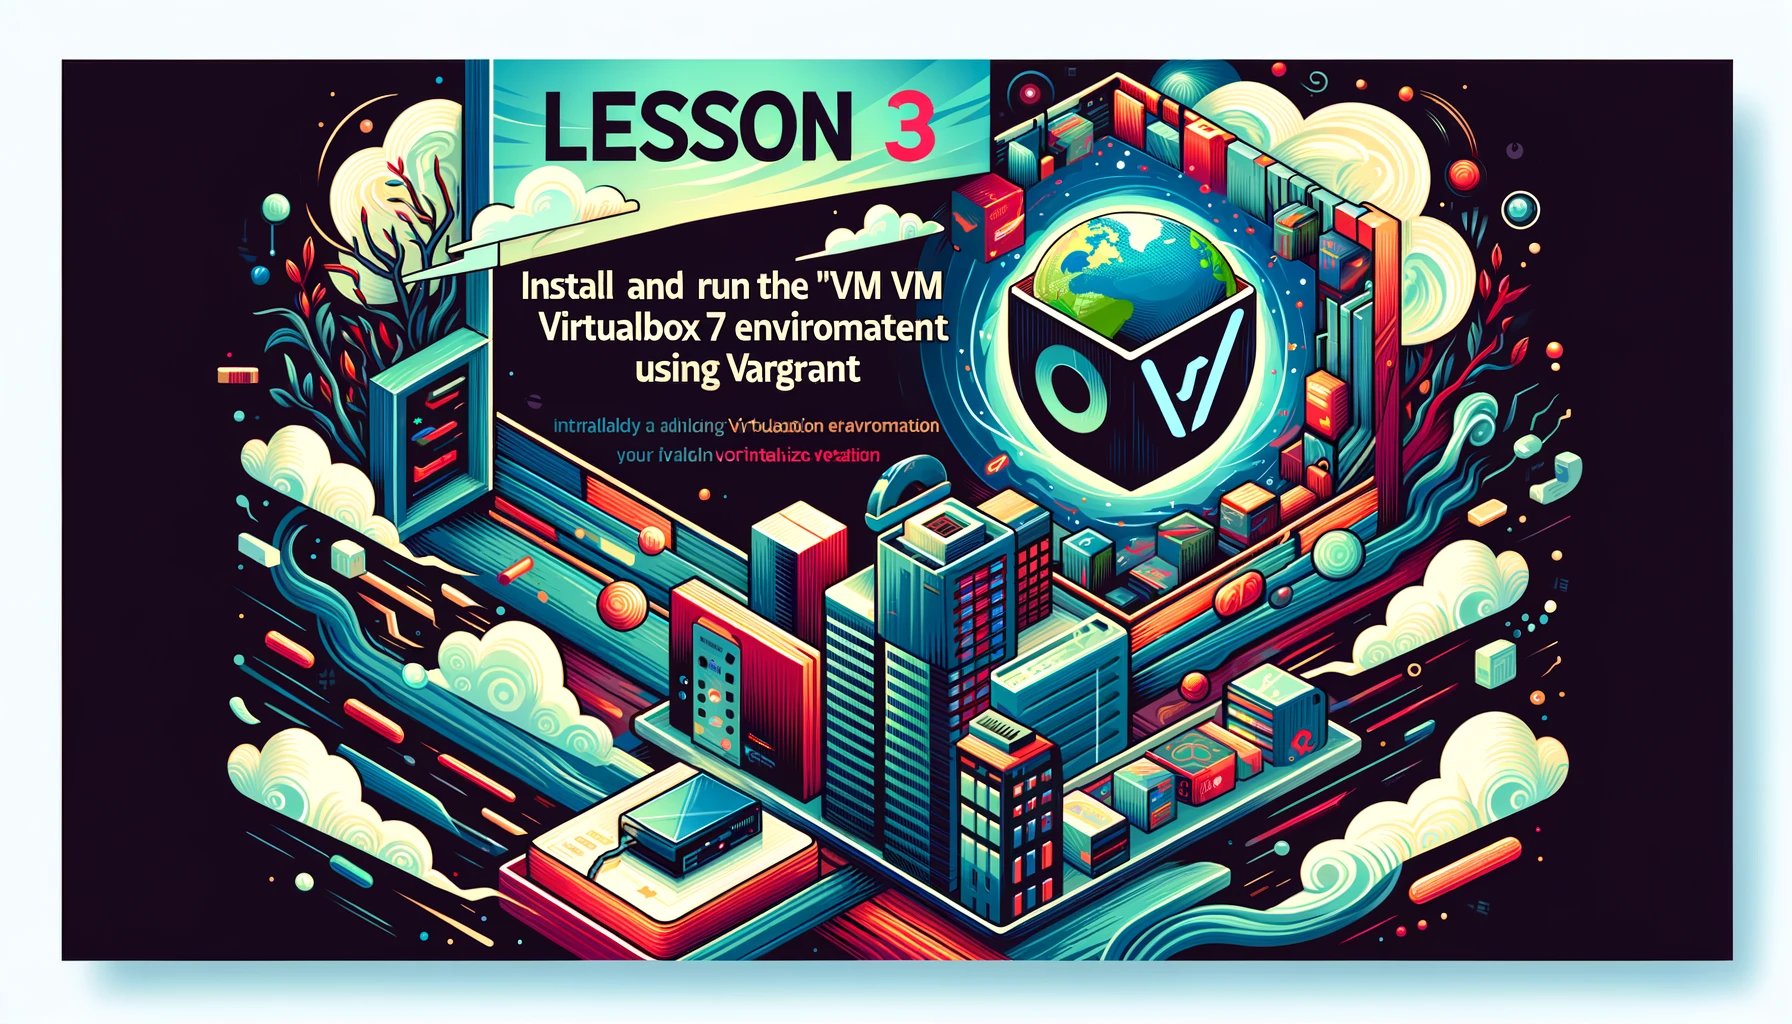 Lesson 2 - Install and run the Oracle VM VirtualBox 7 virtualization environment using Vagrant